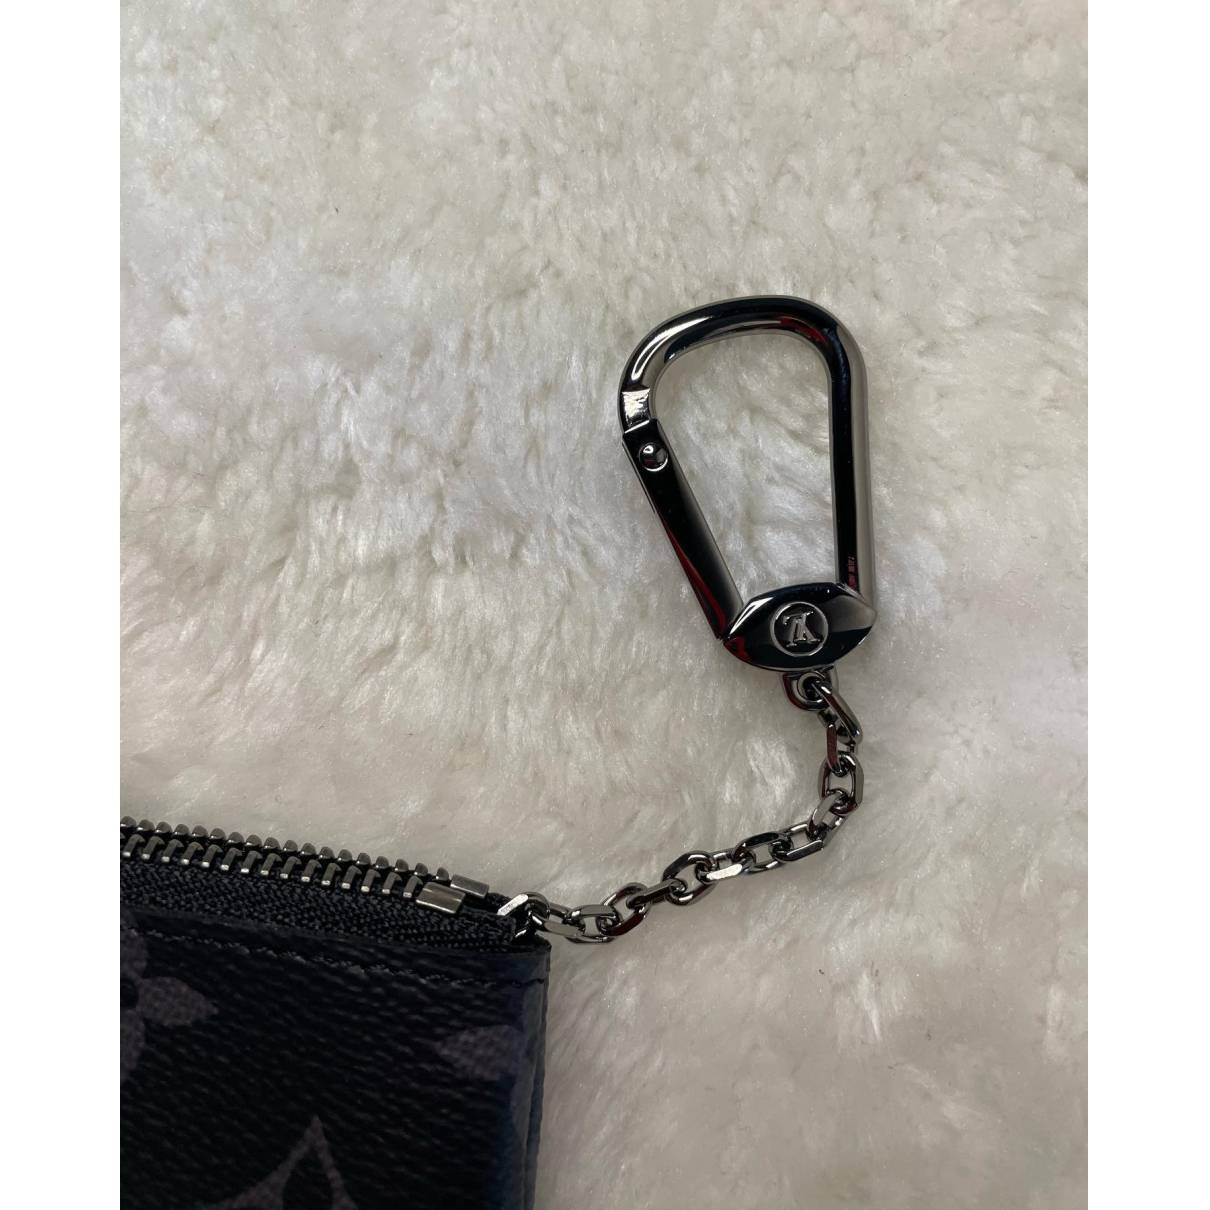 Louis Vuitton Men's Key Pouch Small Bag